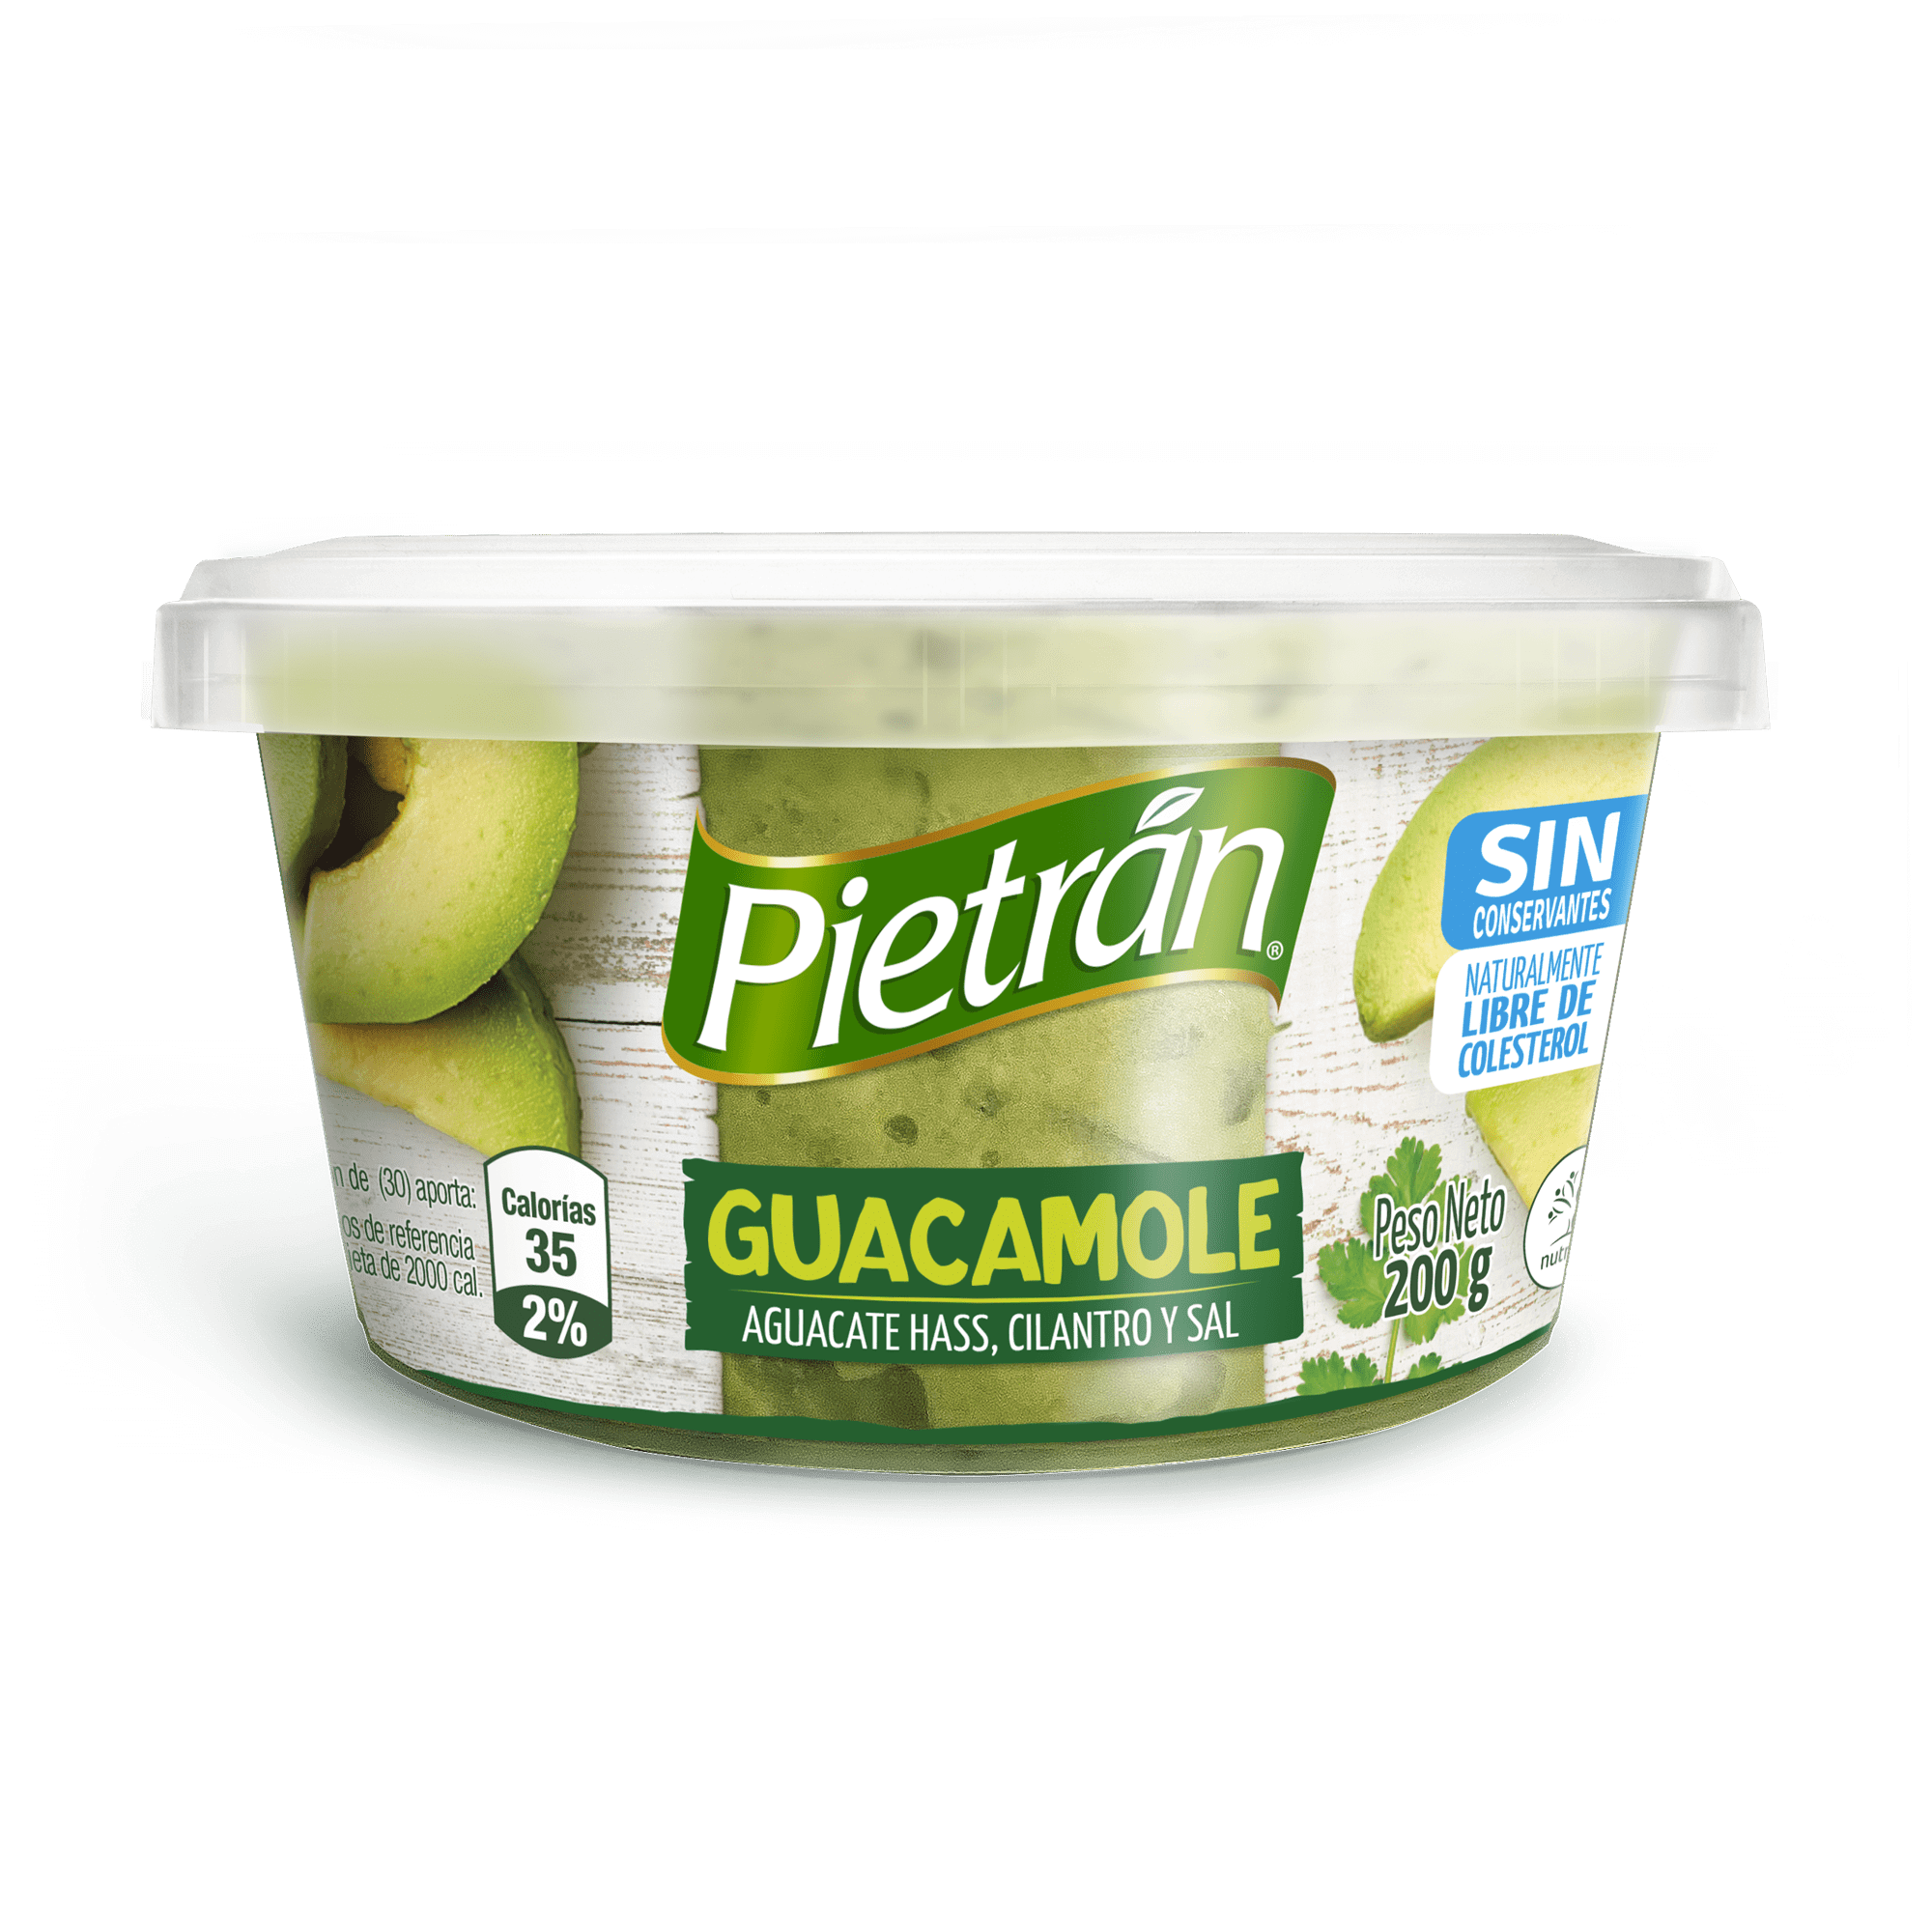 Guacamole Pietrán